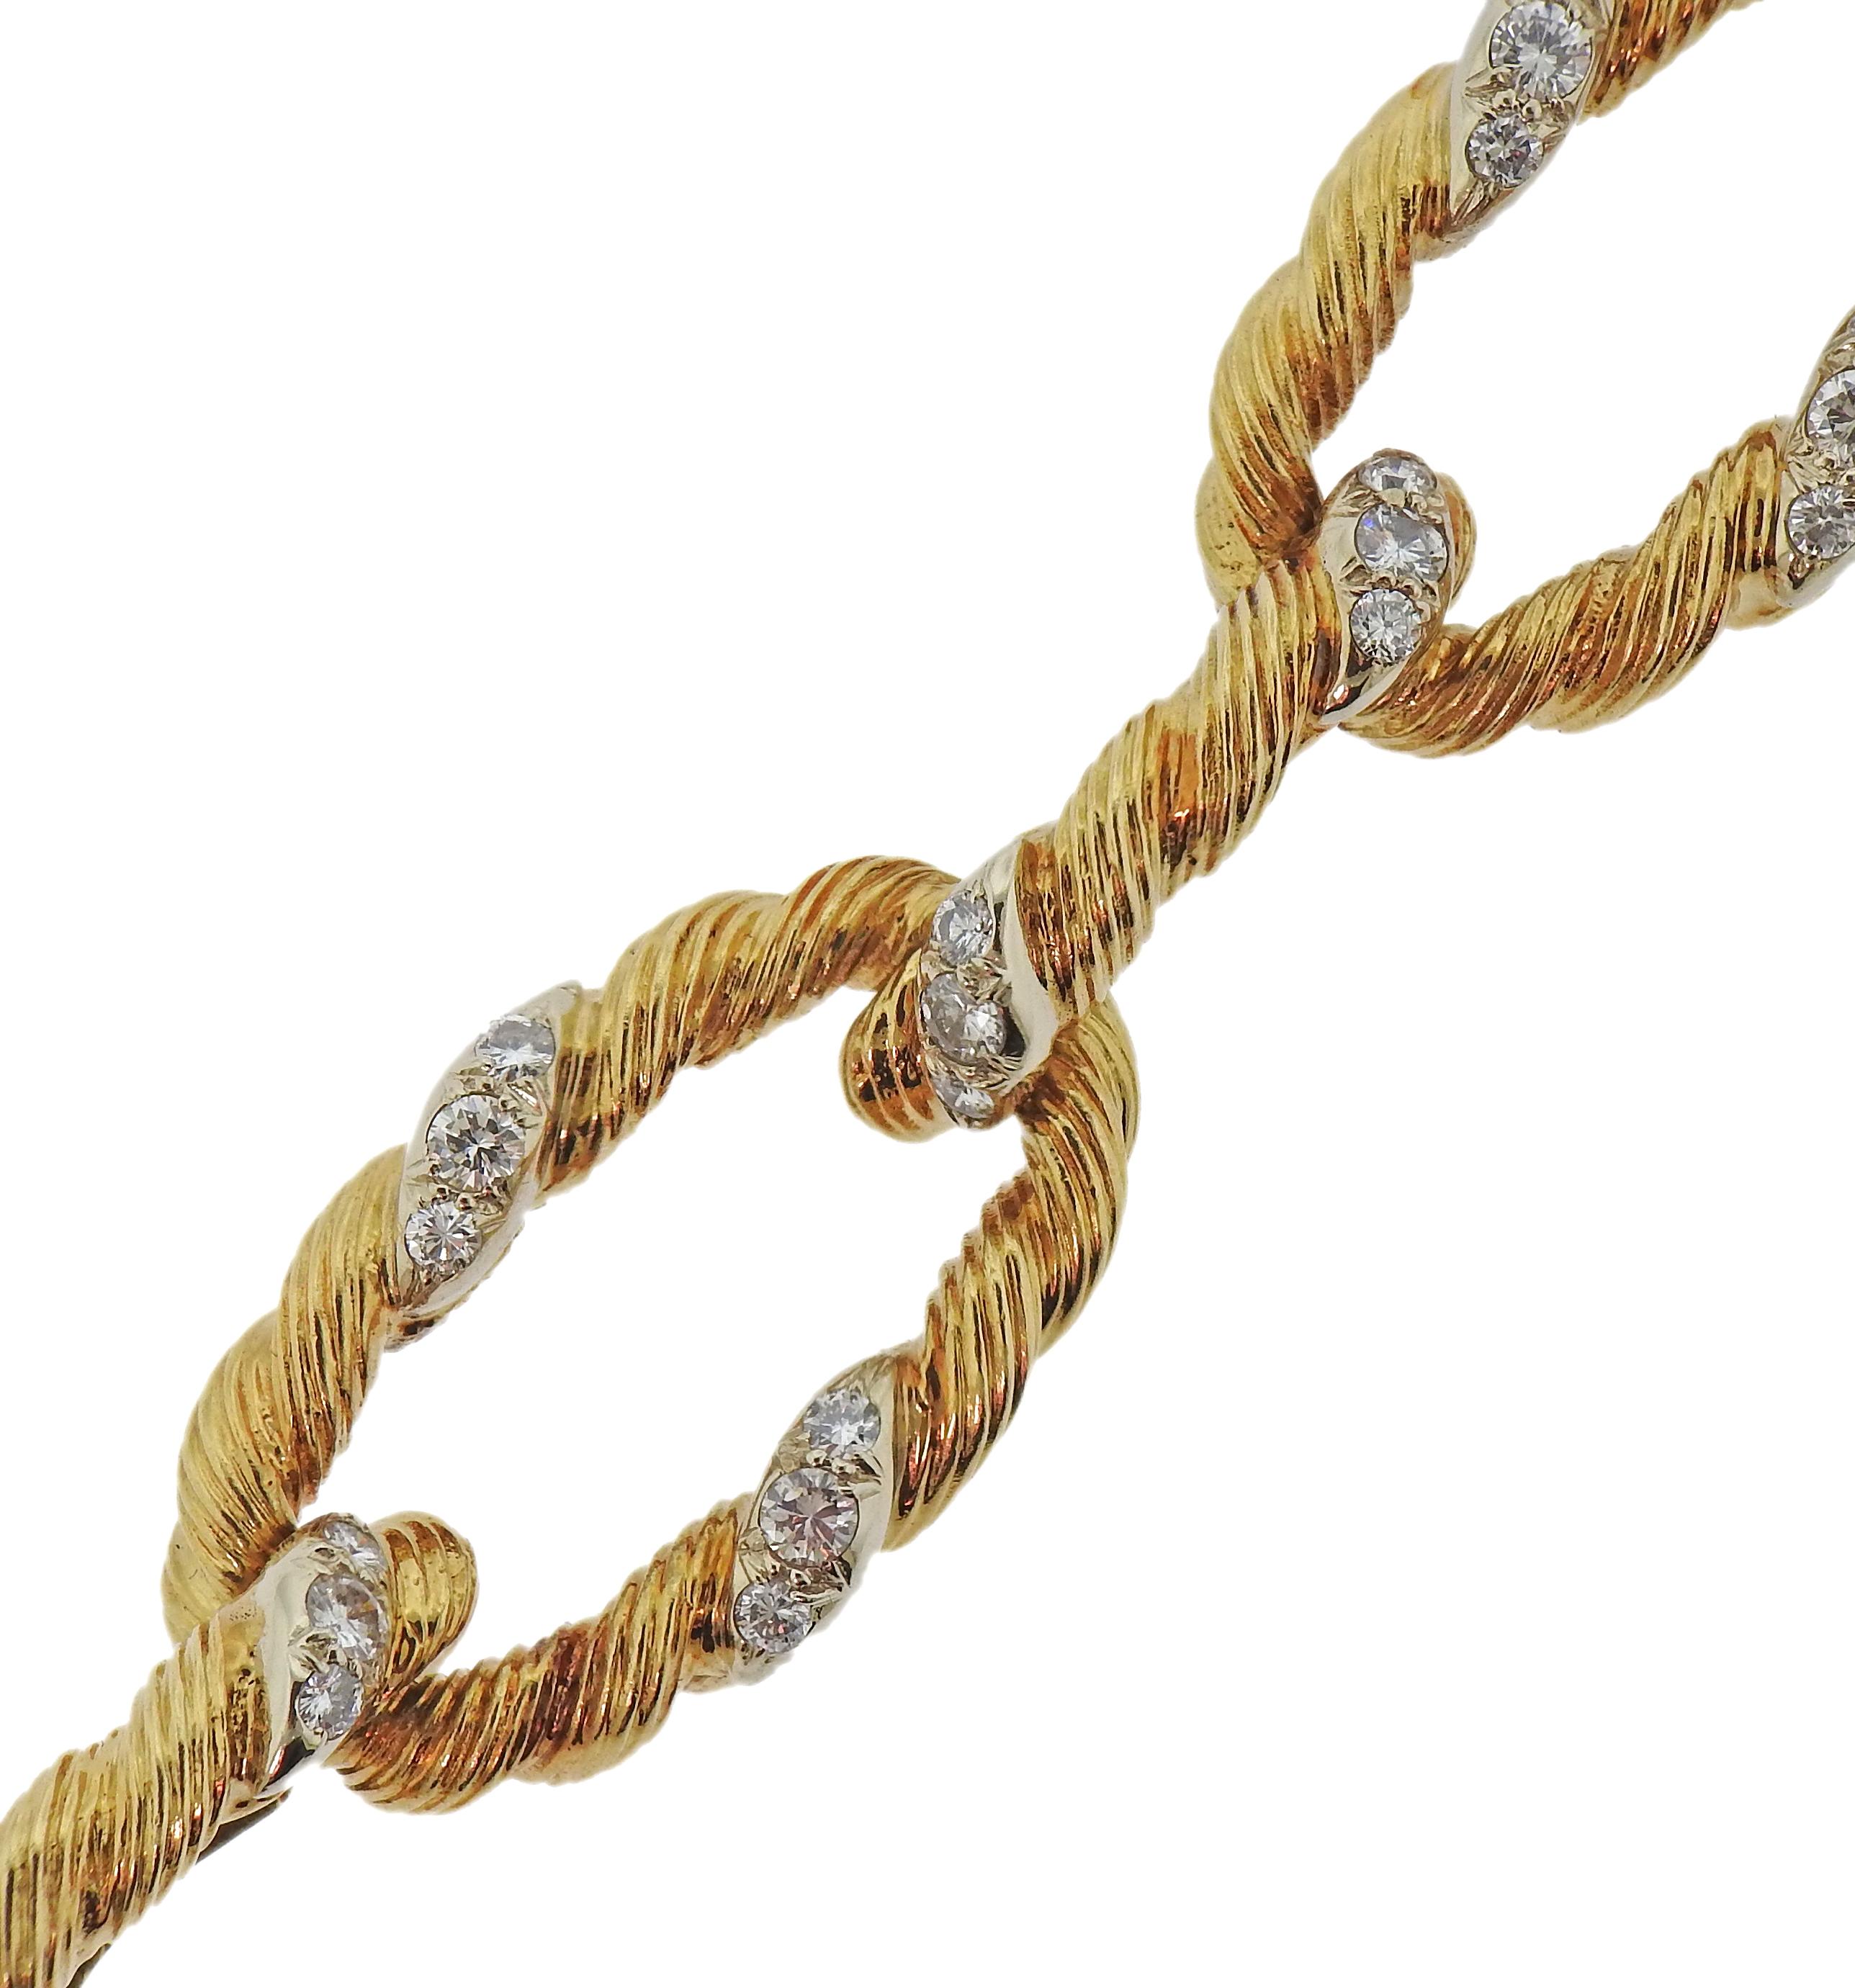 Vintage, circa 1960s 18k gold oval link bracelet, set with approx. 1.60ctw in diamonds. Bracelet is 7